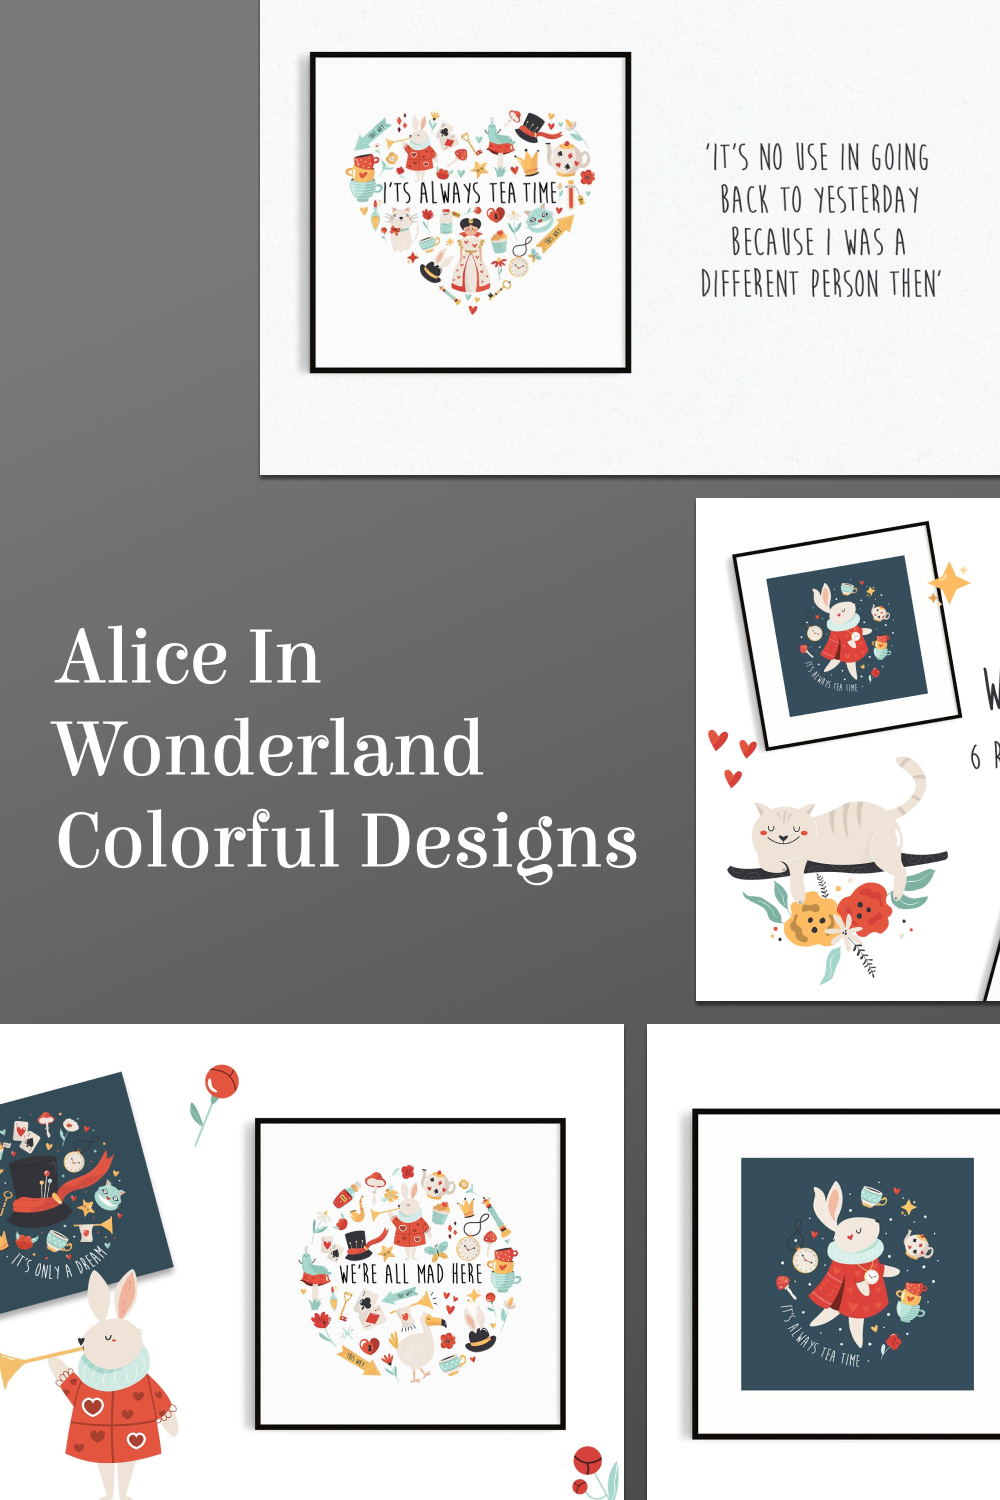 Alice in wonderland colorful designs of pinterest.